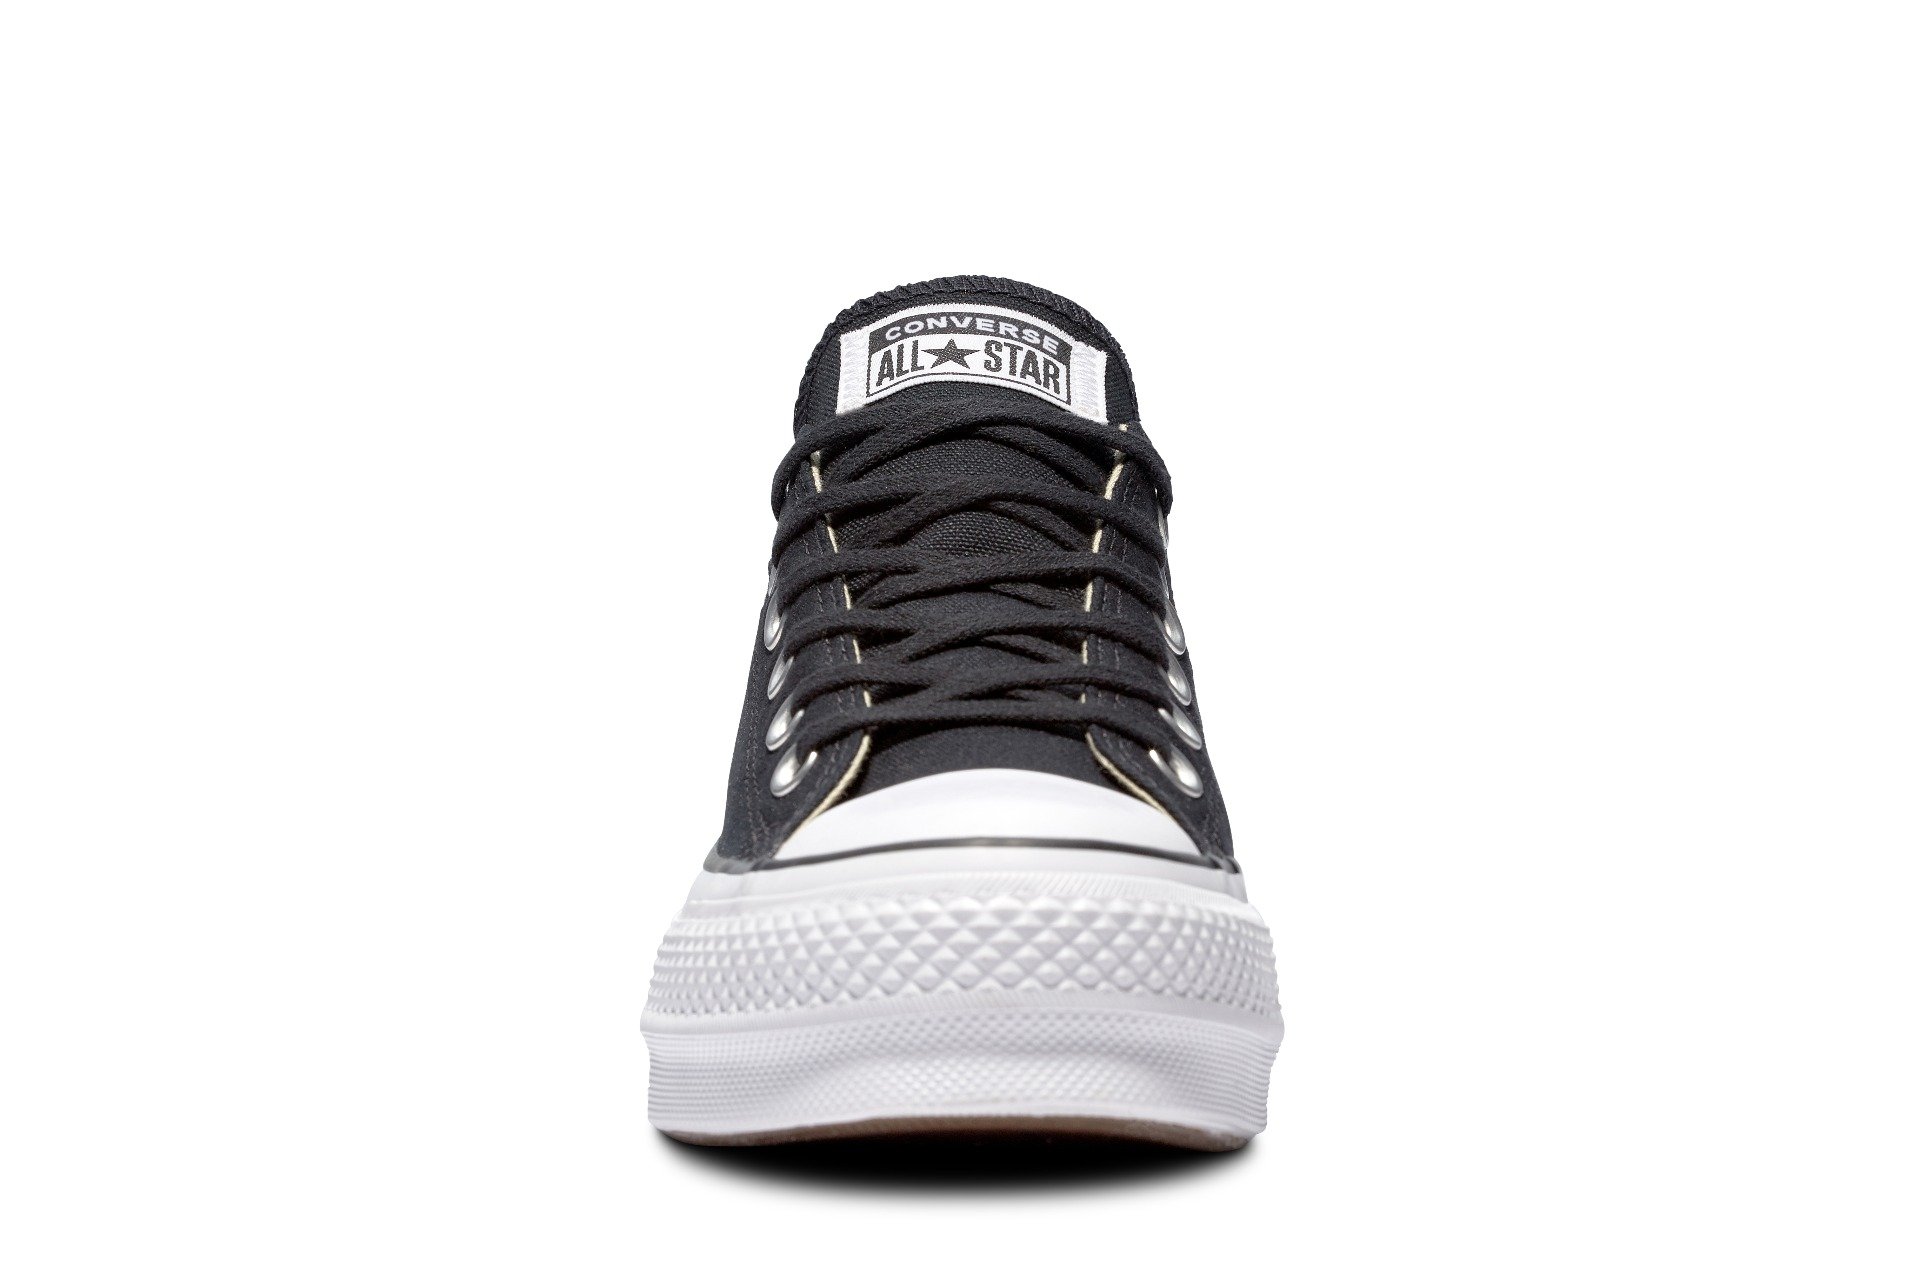 Versnipperd Wiskundig Partina City Ladies-All Star Platform Sneaker - Black